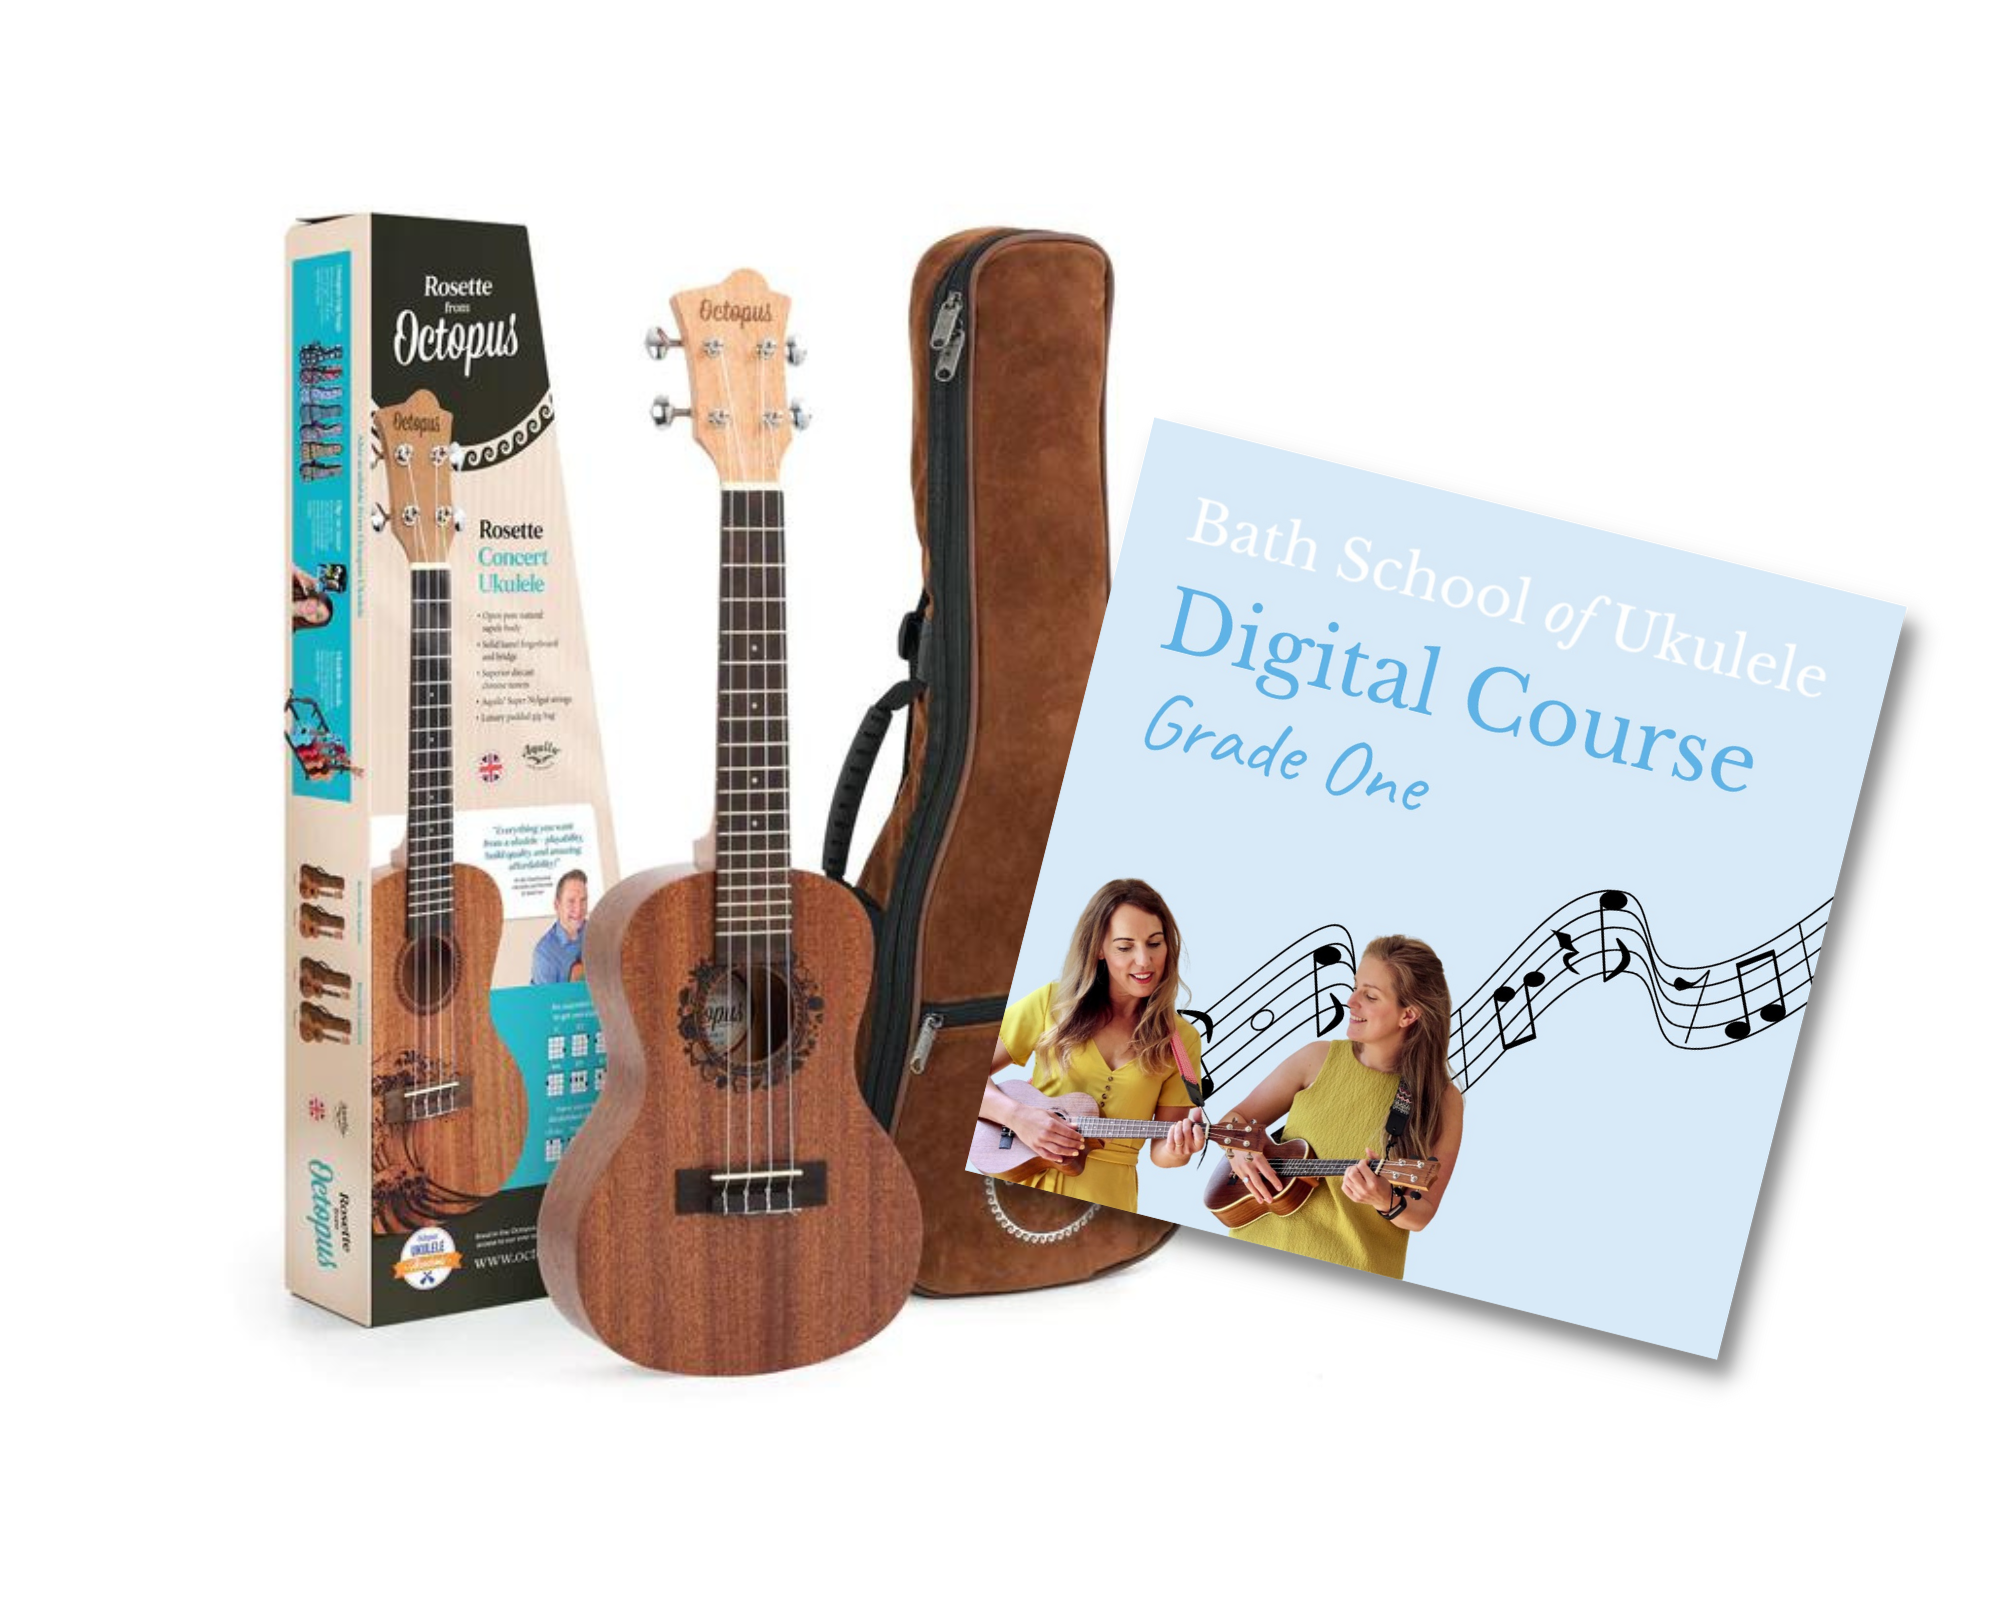 Rosetta Concert Ukulele and Digital Course - Grade One £130